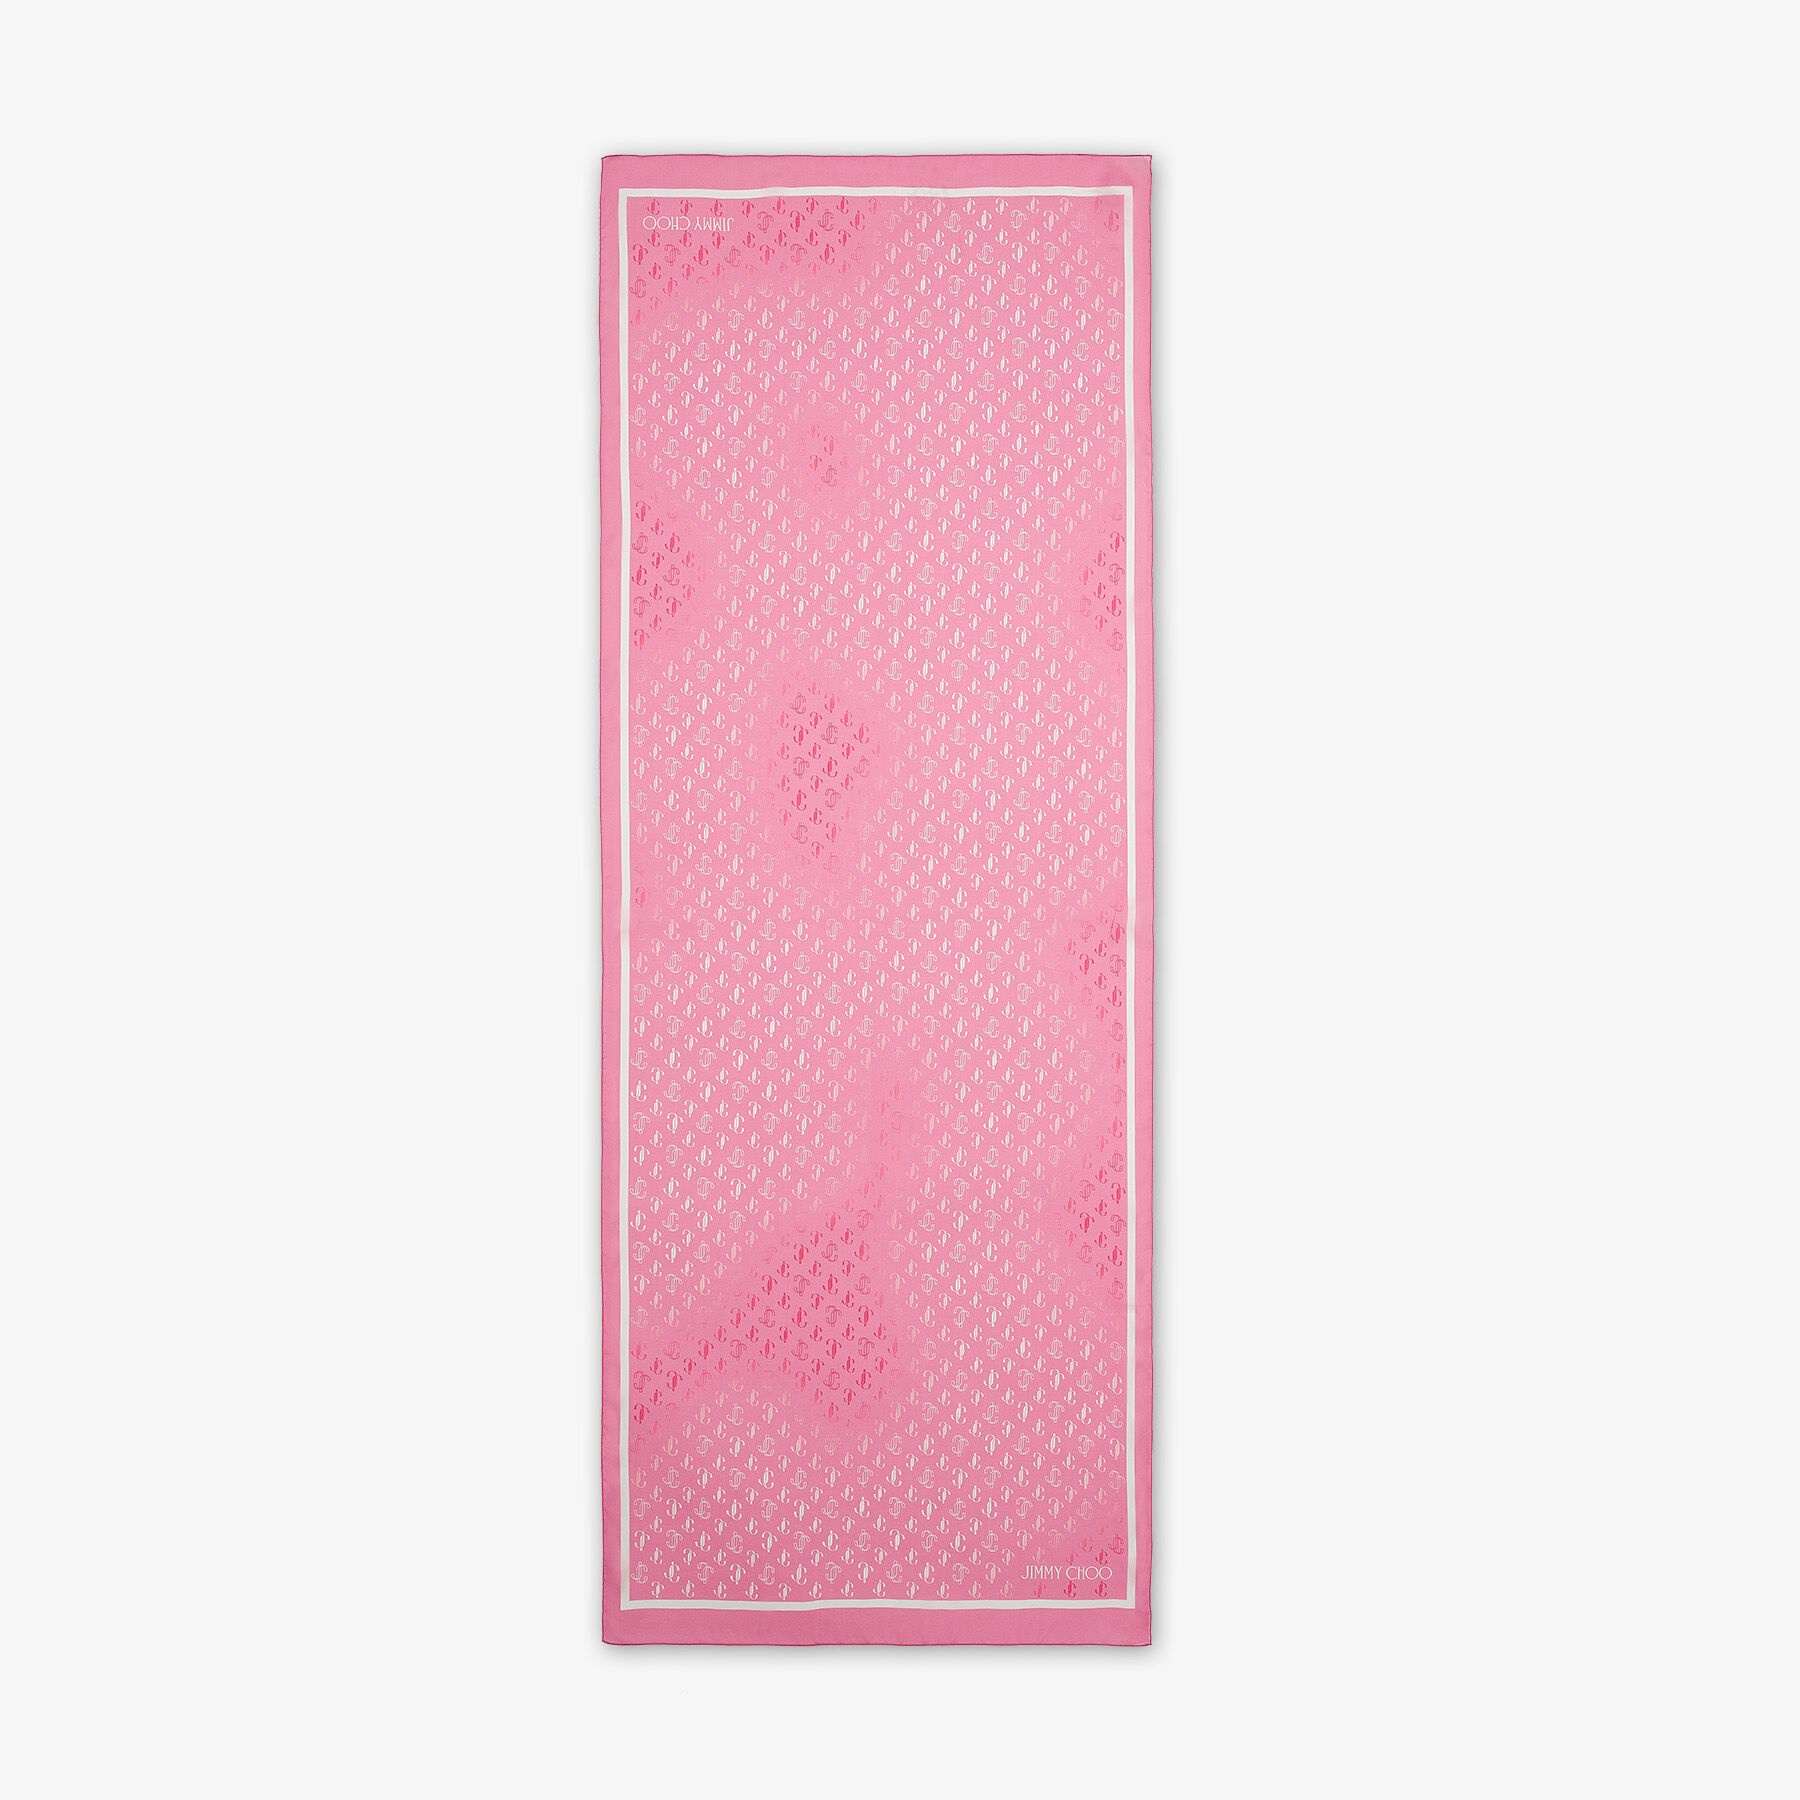 Doris
Candy Pink Silk Stole with Printed JC Monogram - 2